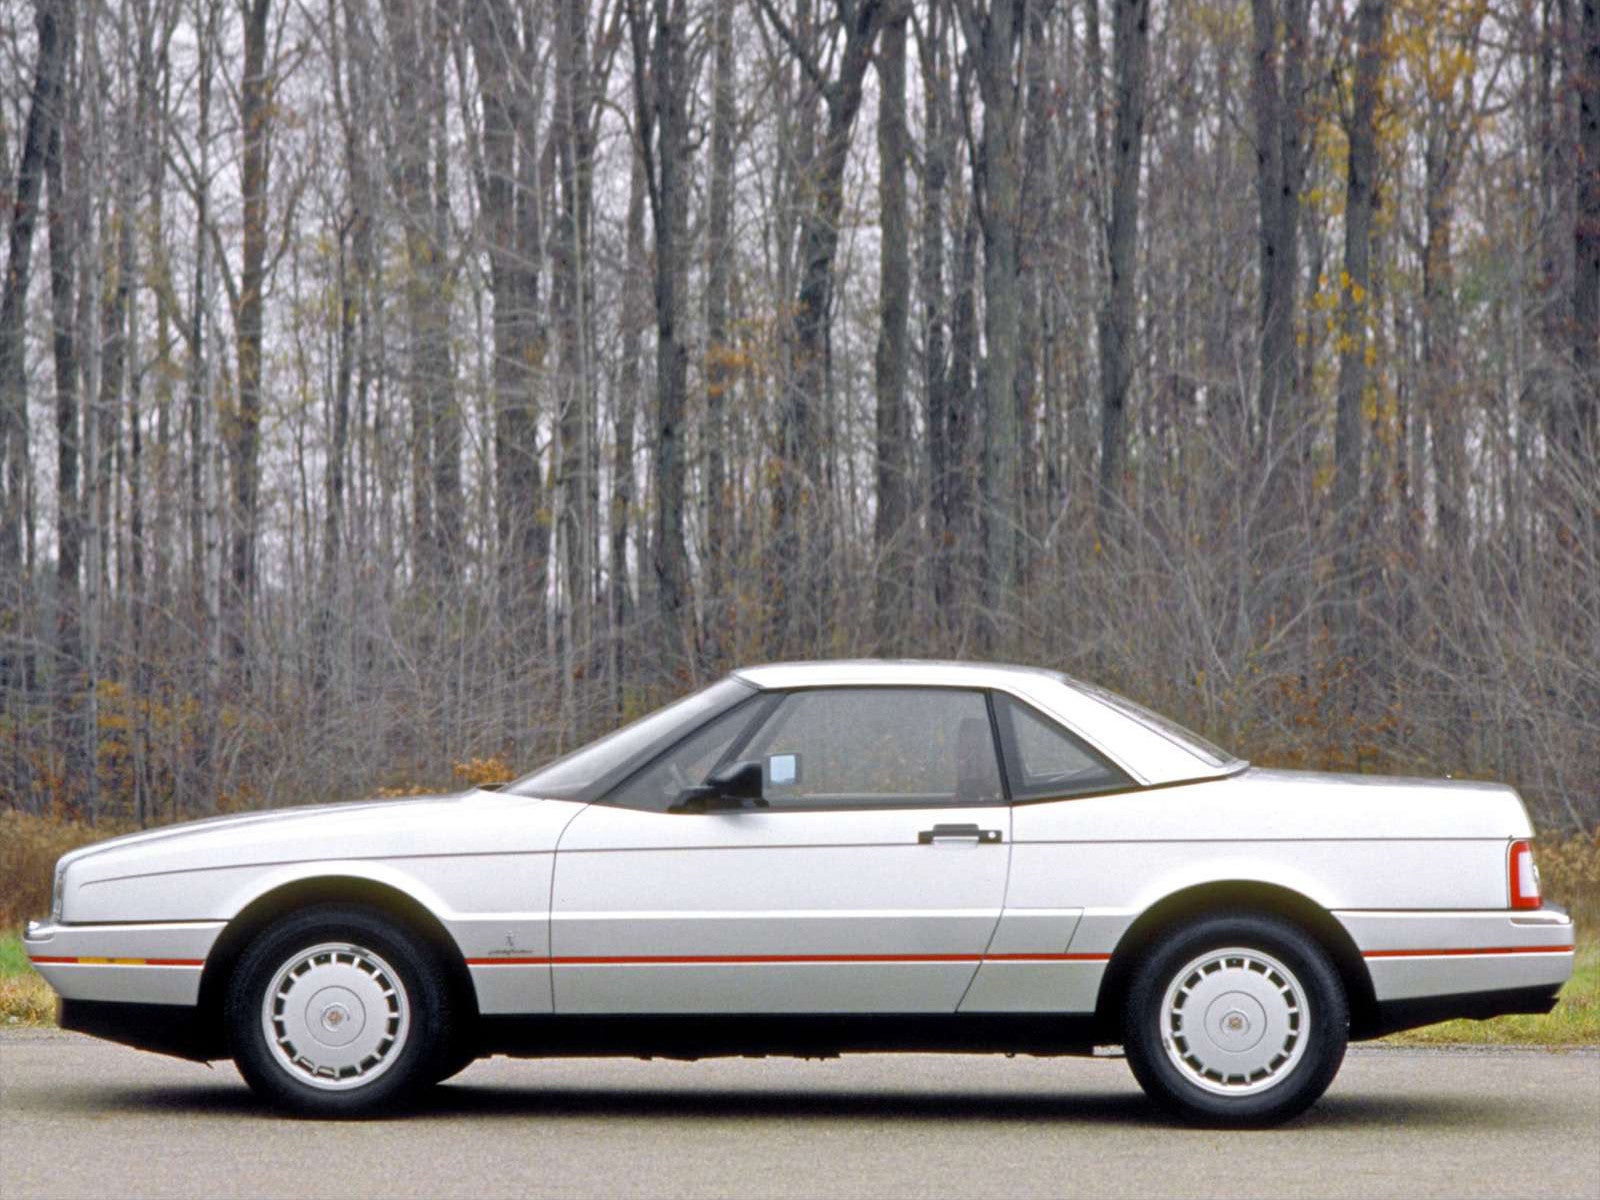 1993 Cadillac Allante Test Drive Review - CarGurus